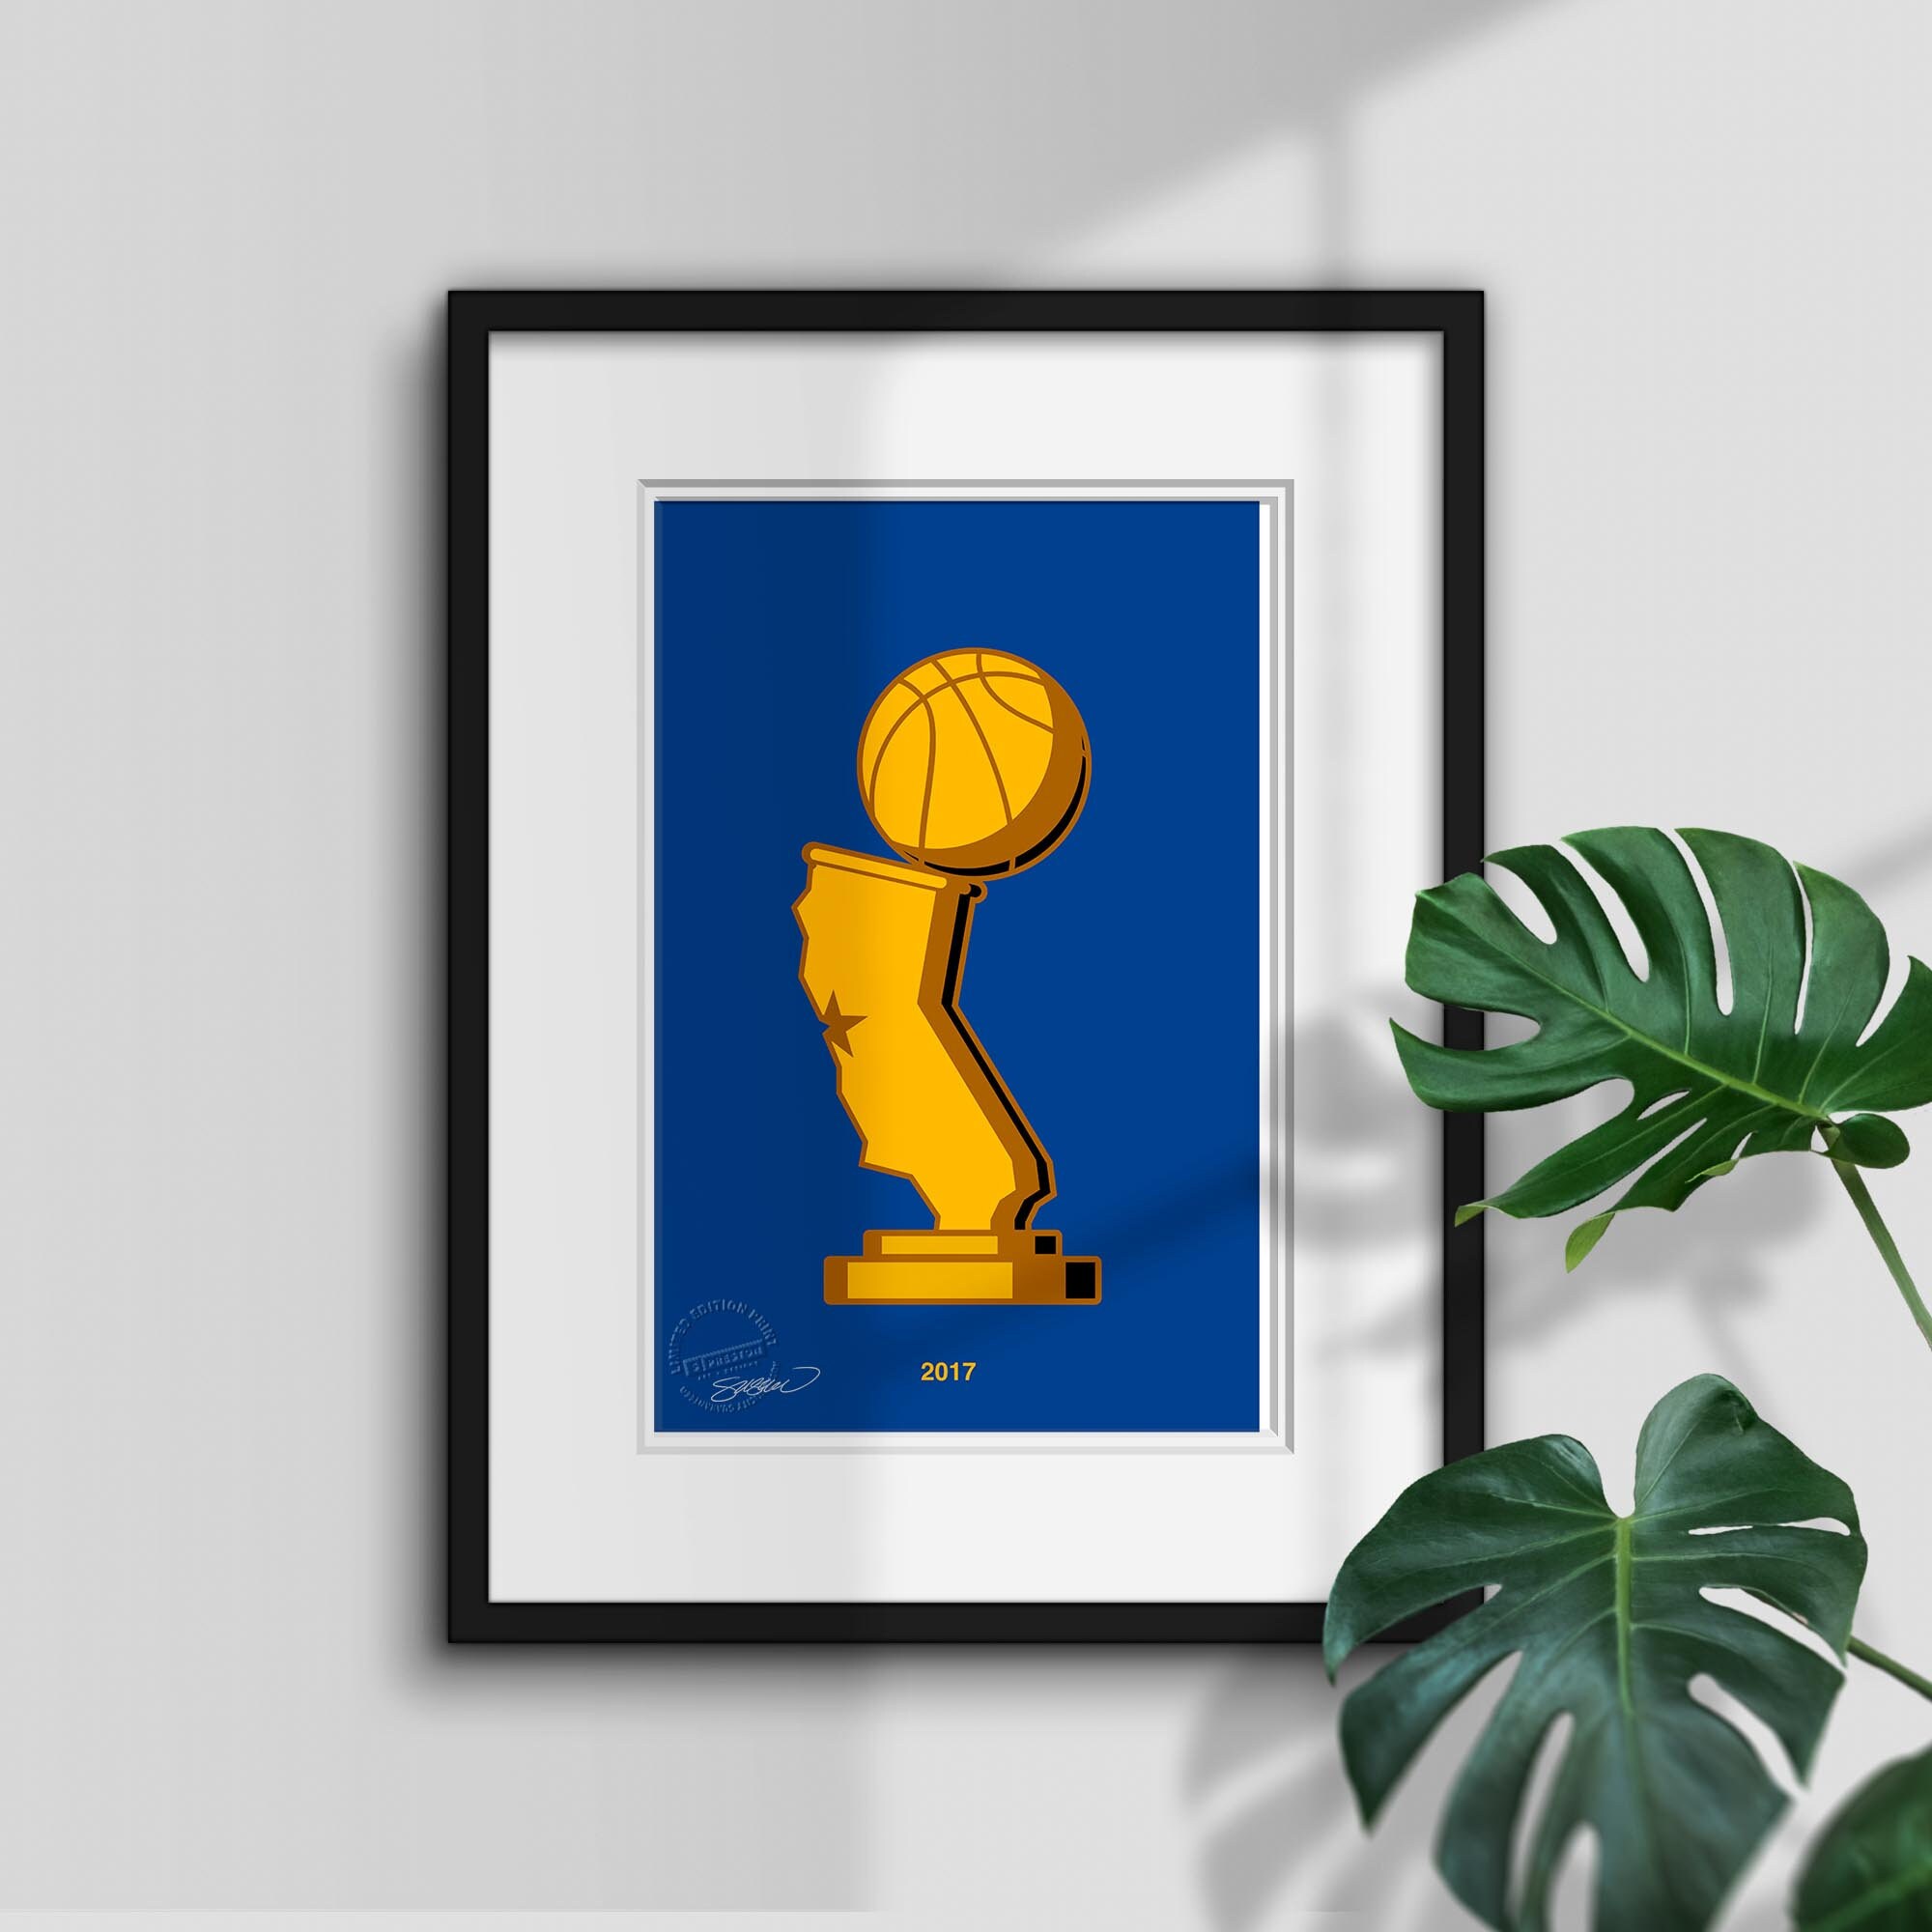 Golden State Warriors Minimalist NBA World Champions 2017 - NBA Licensed Limited Edition Art Poster Print Wall Decor by S Preston